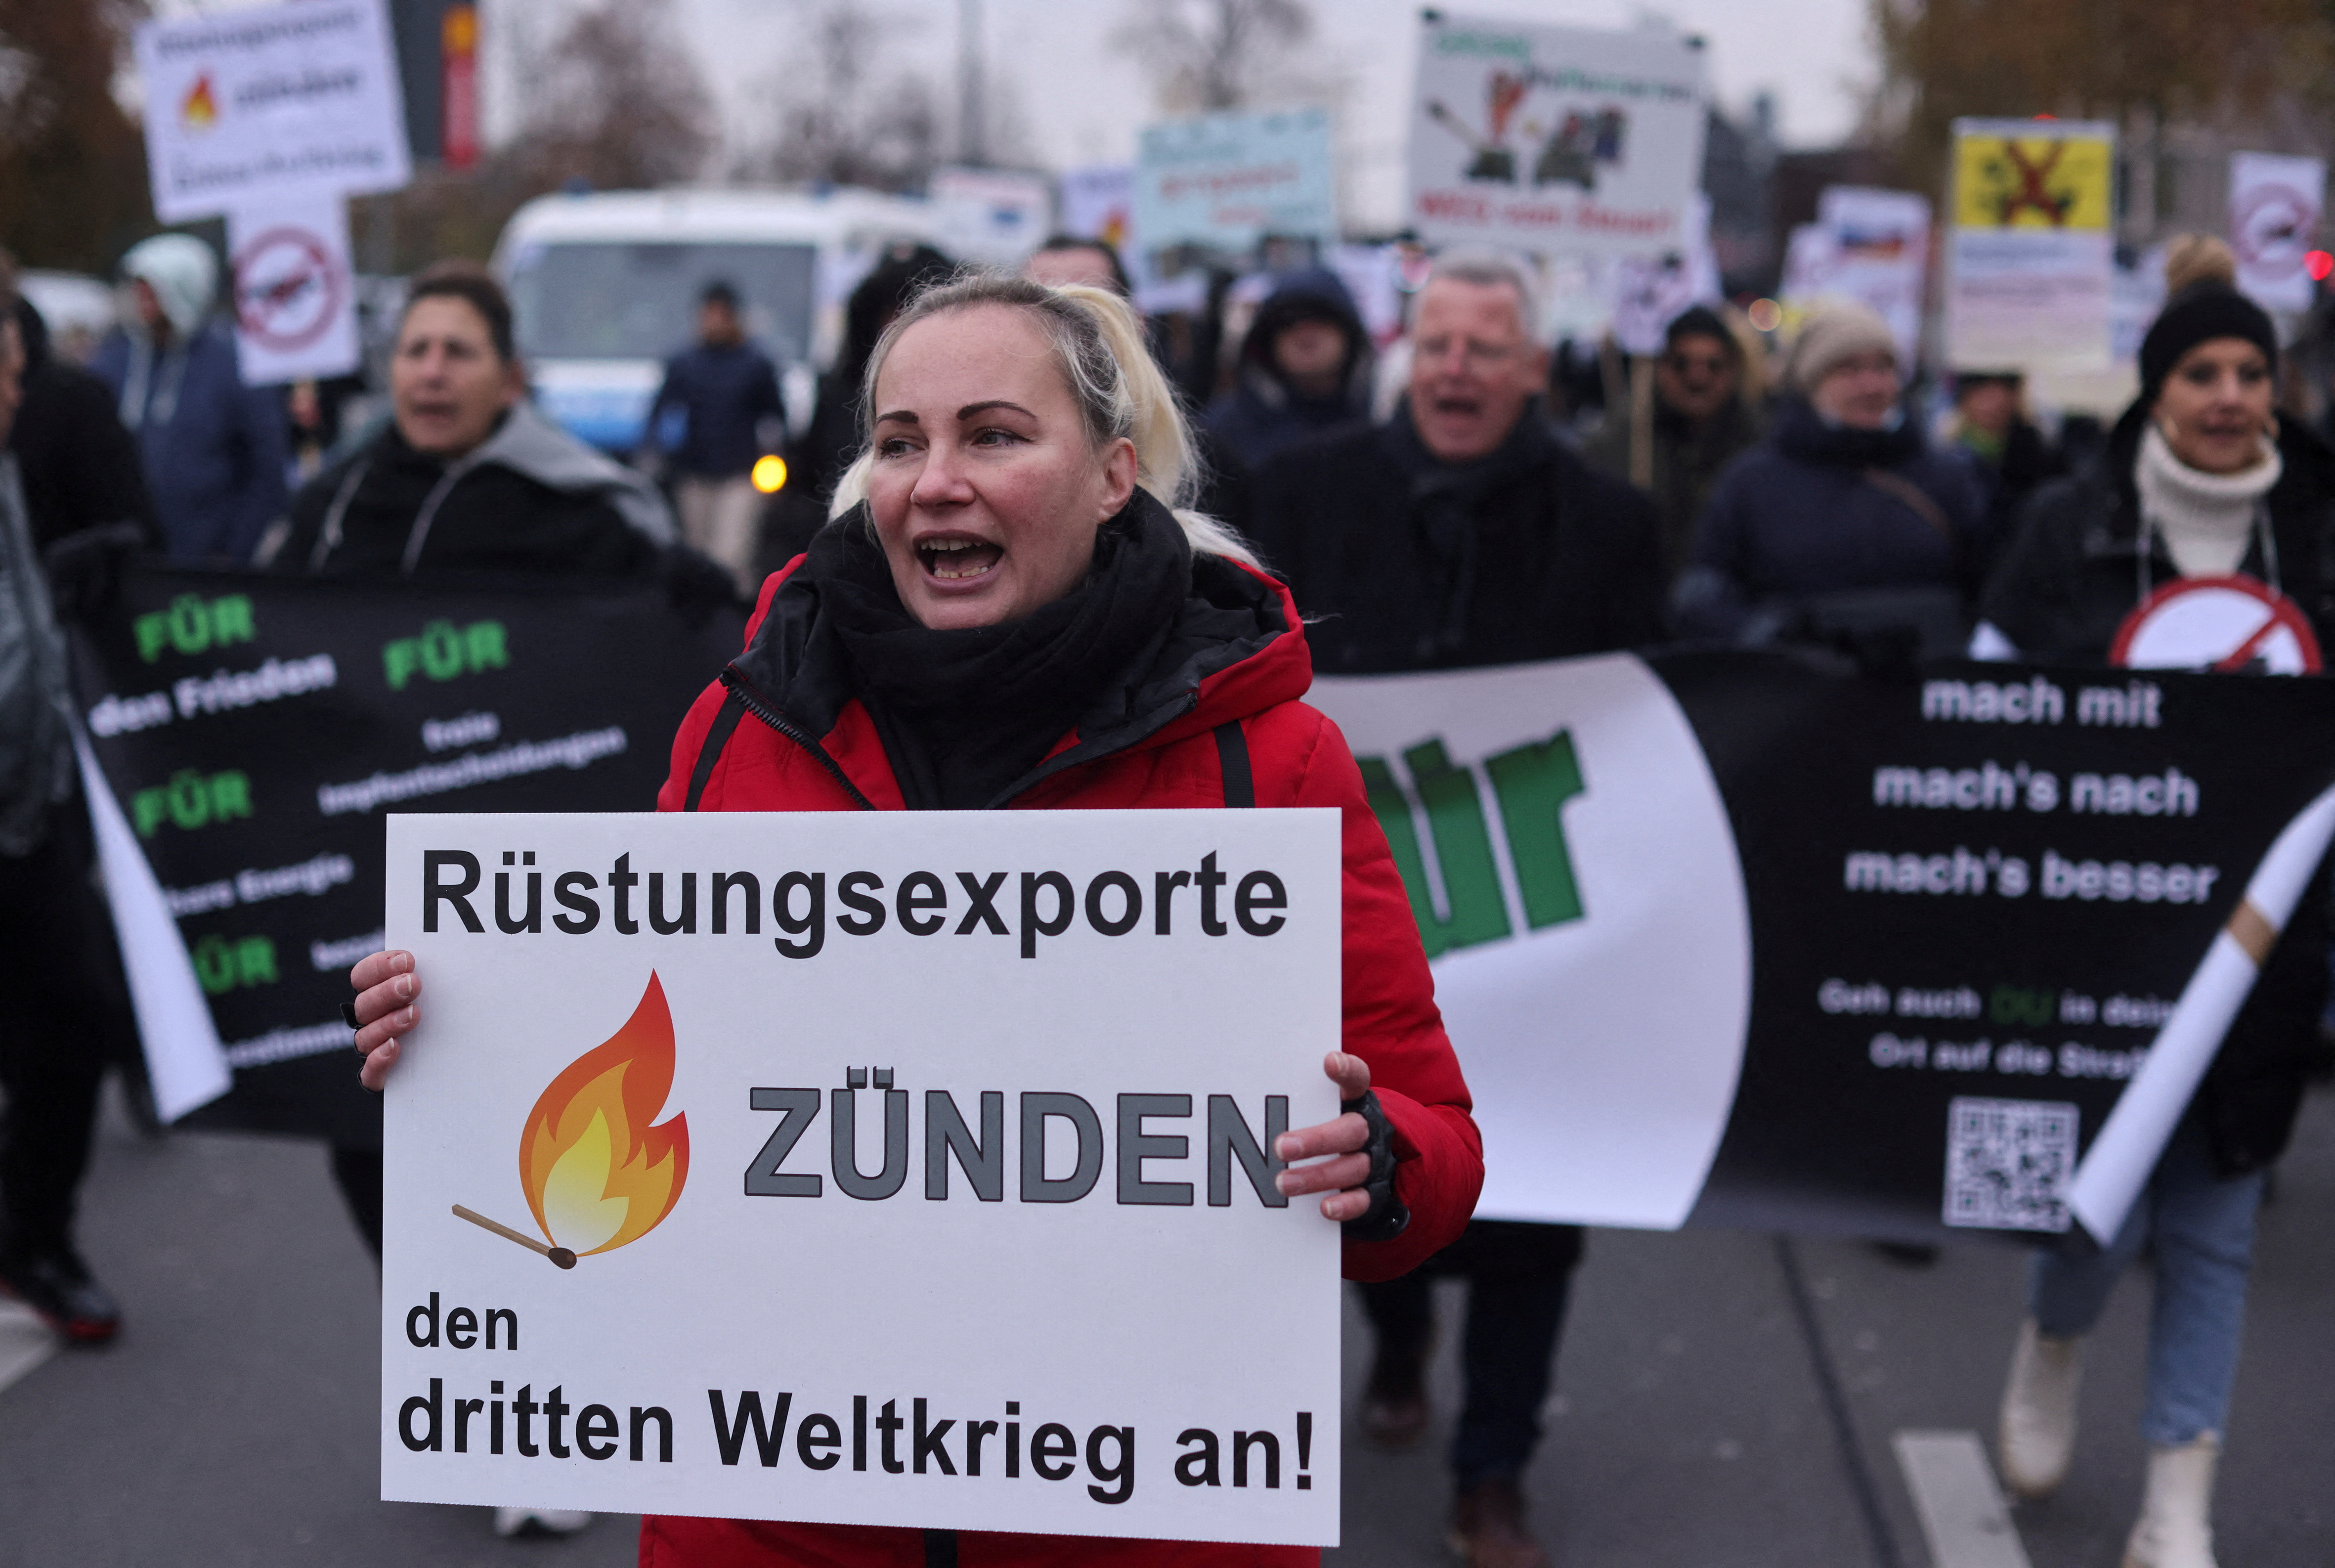 Pro-Russian demonstrators protest amid Russia's invasion of Ukraine, in Cologne